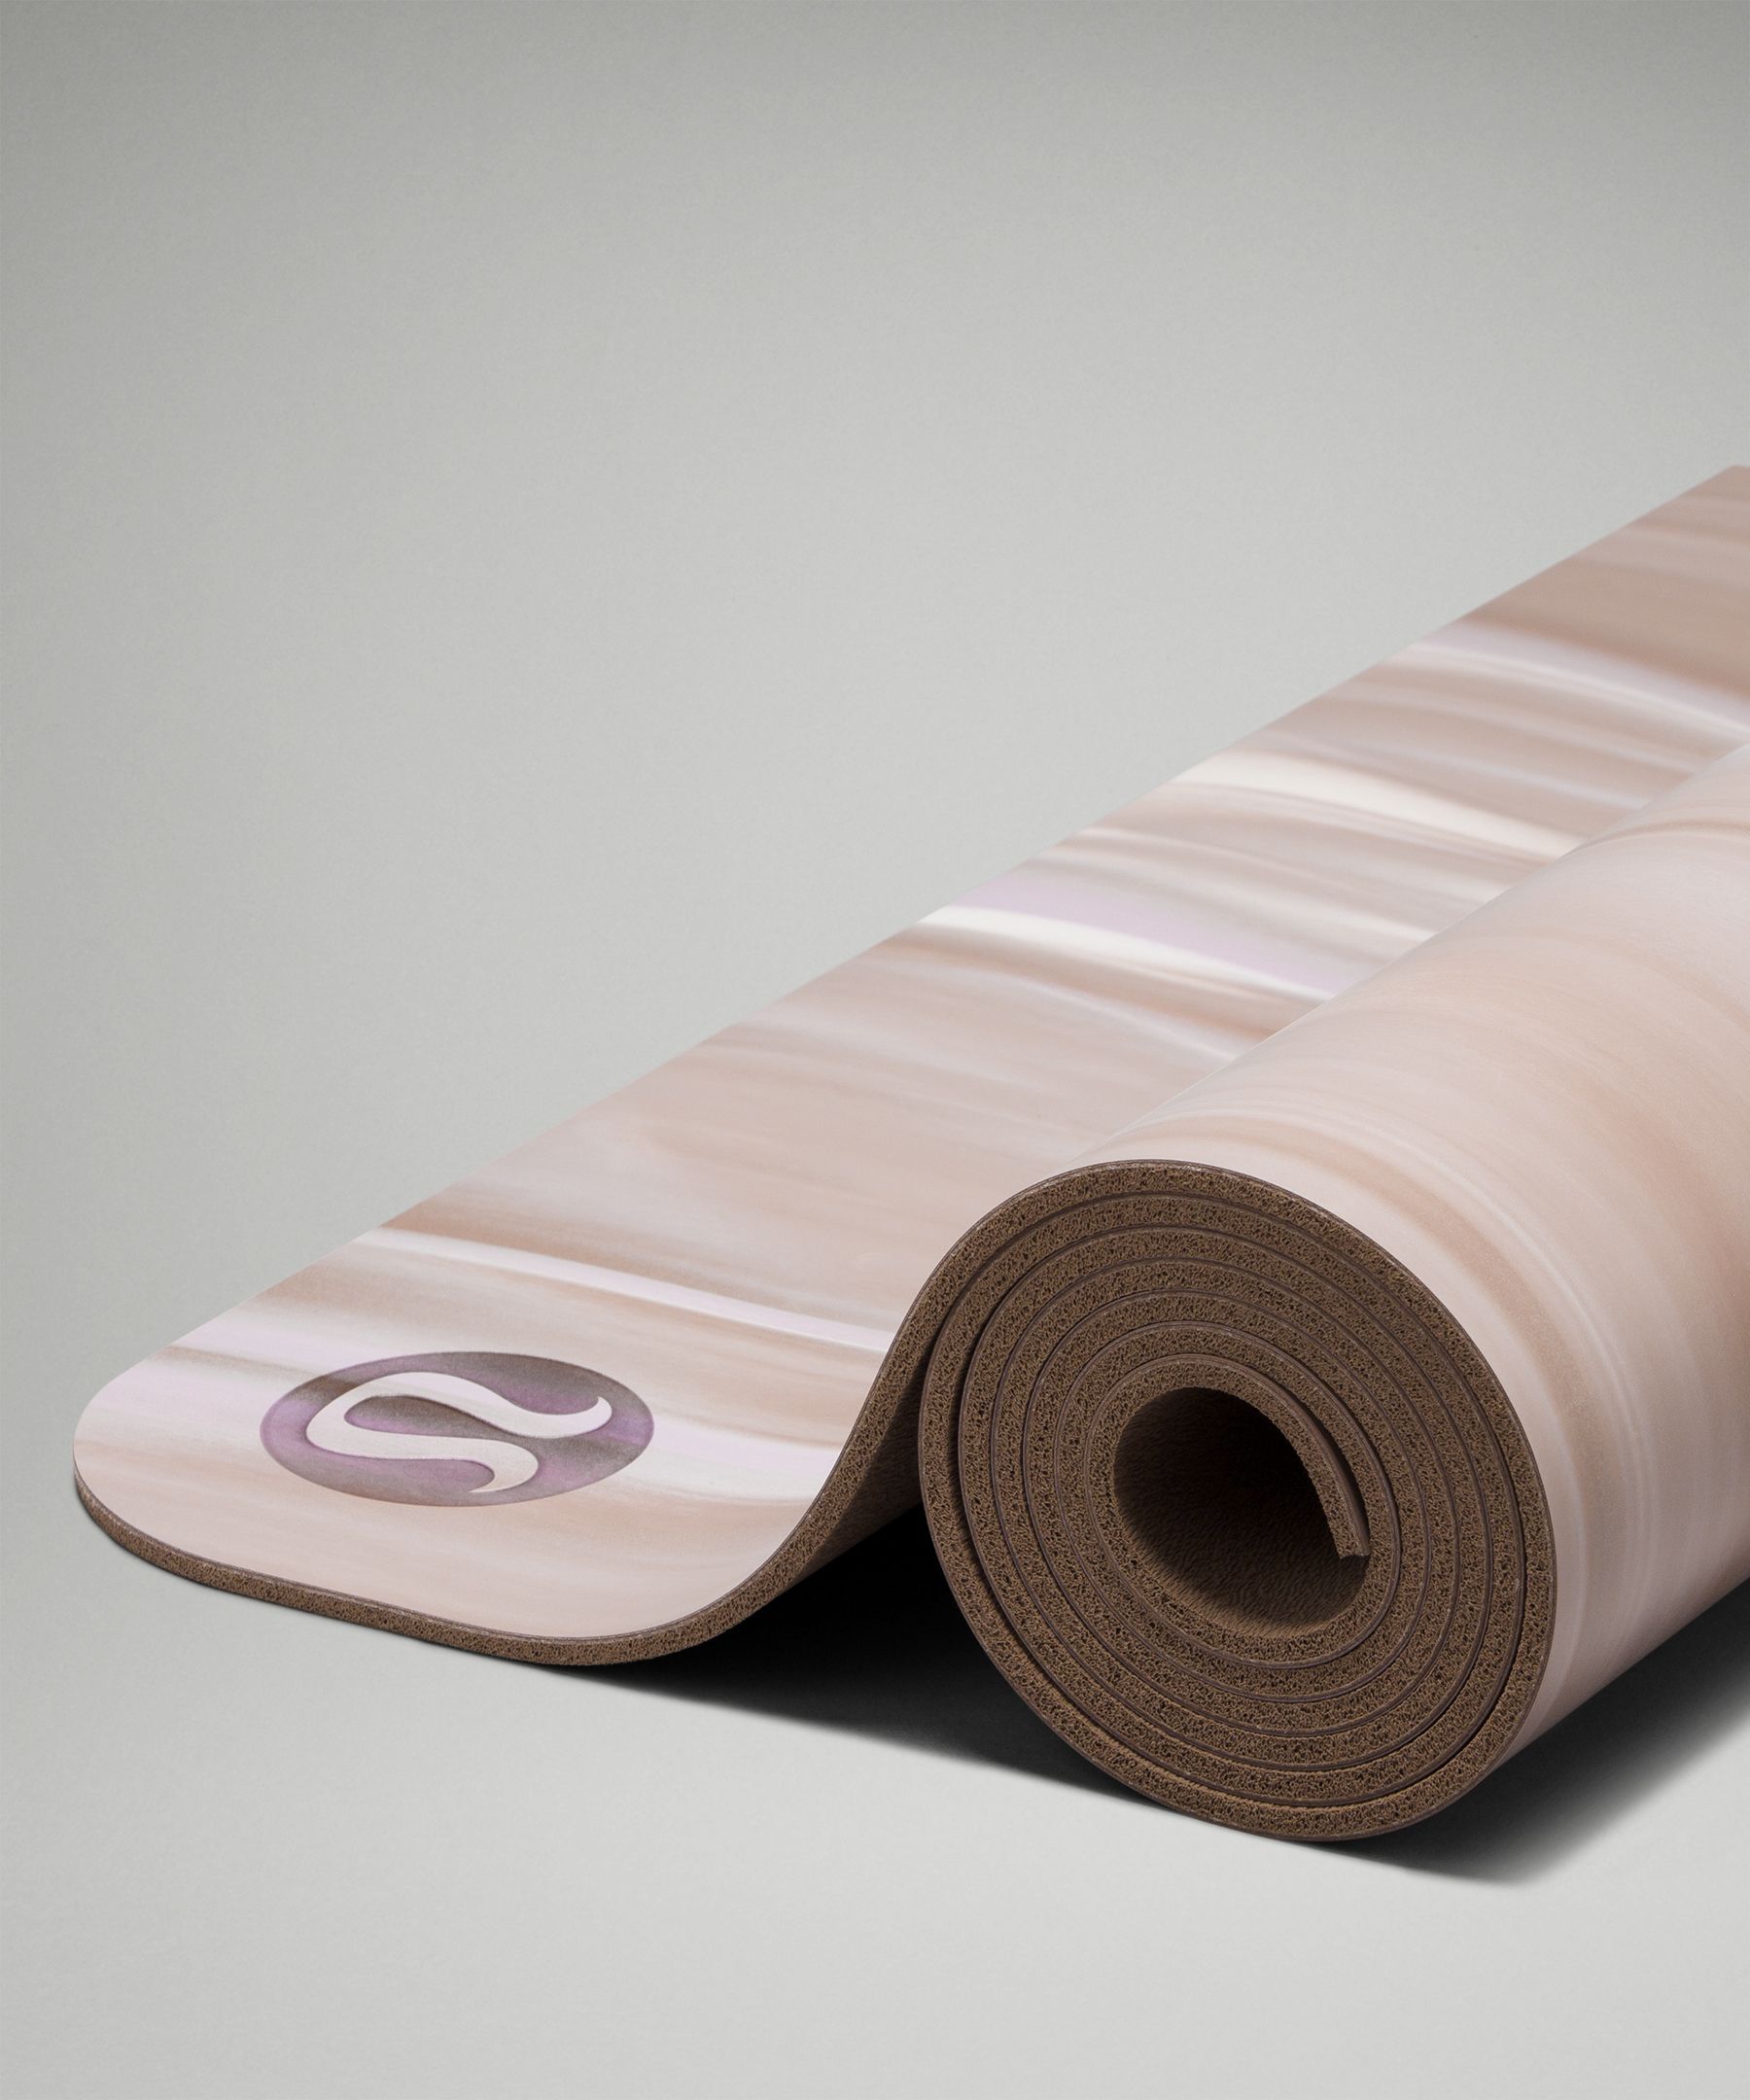  Yoga Mat natural rubber - pattern F 4 mm - beige